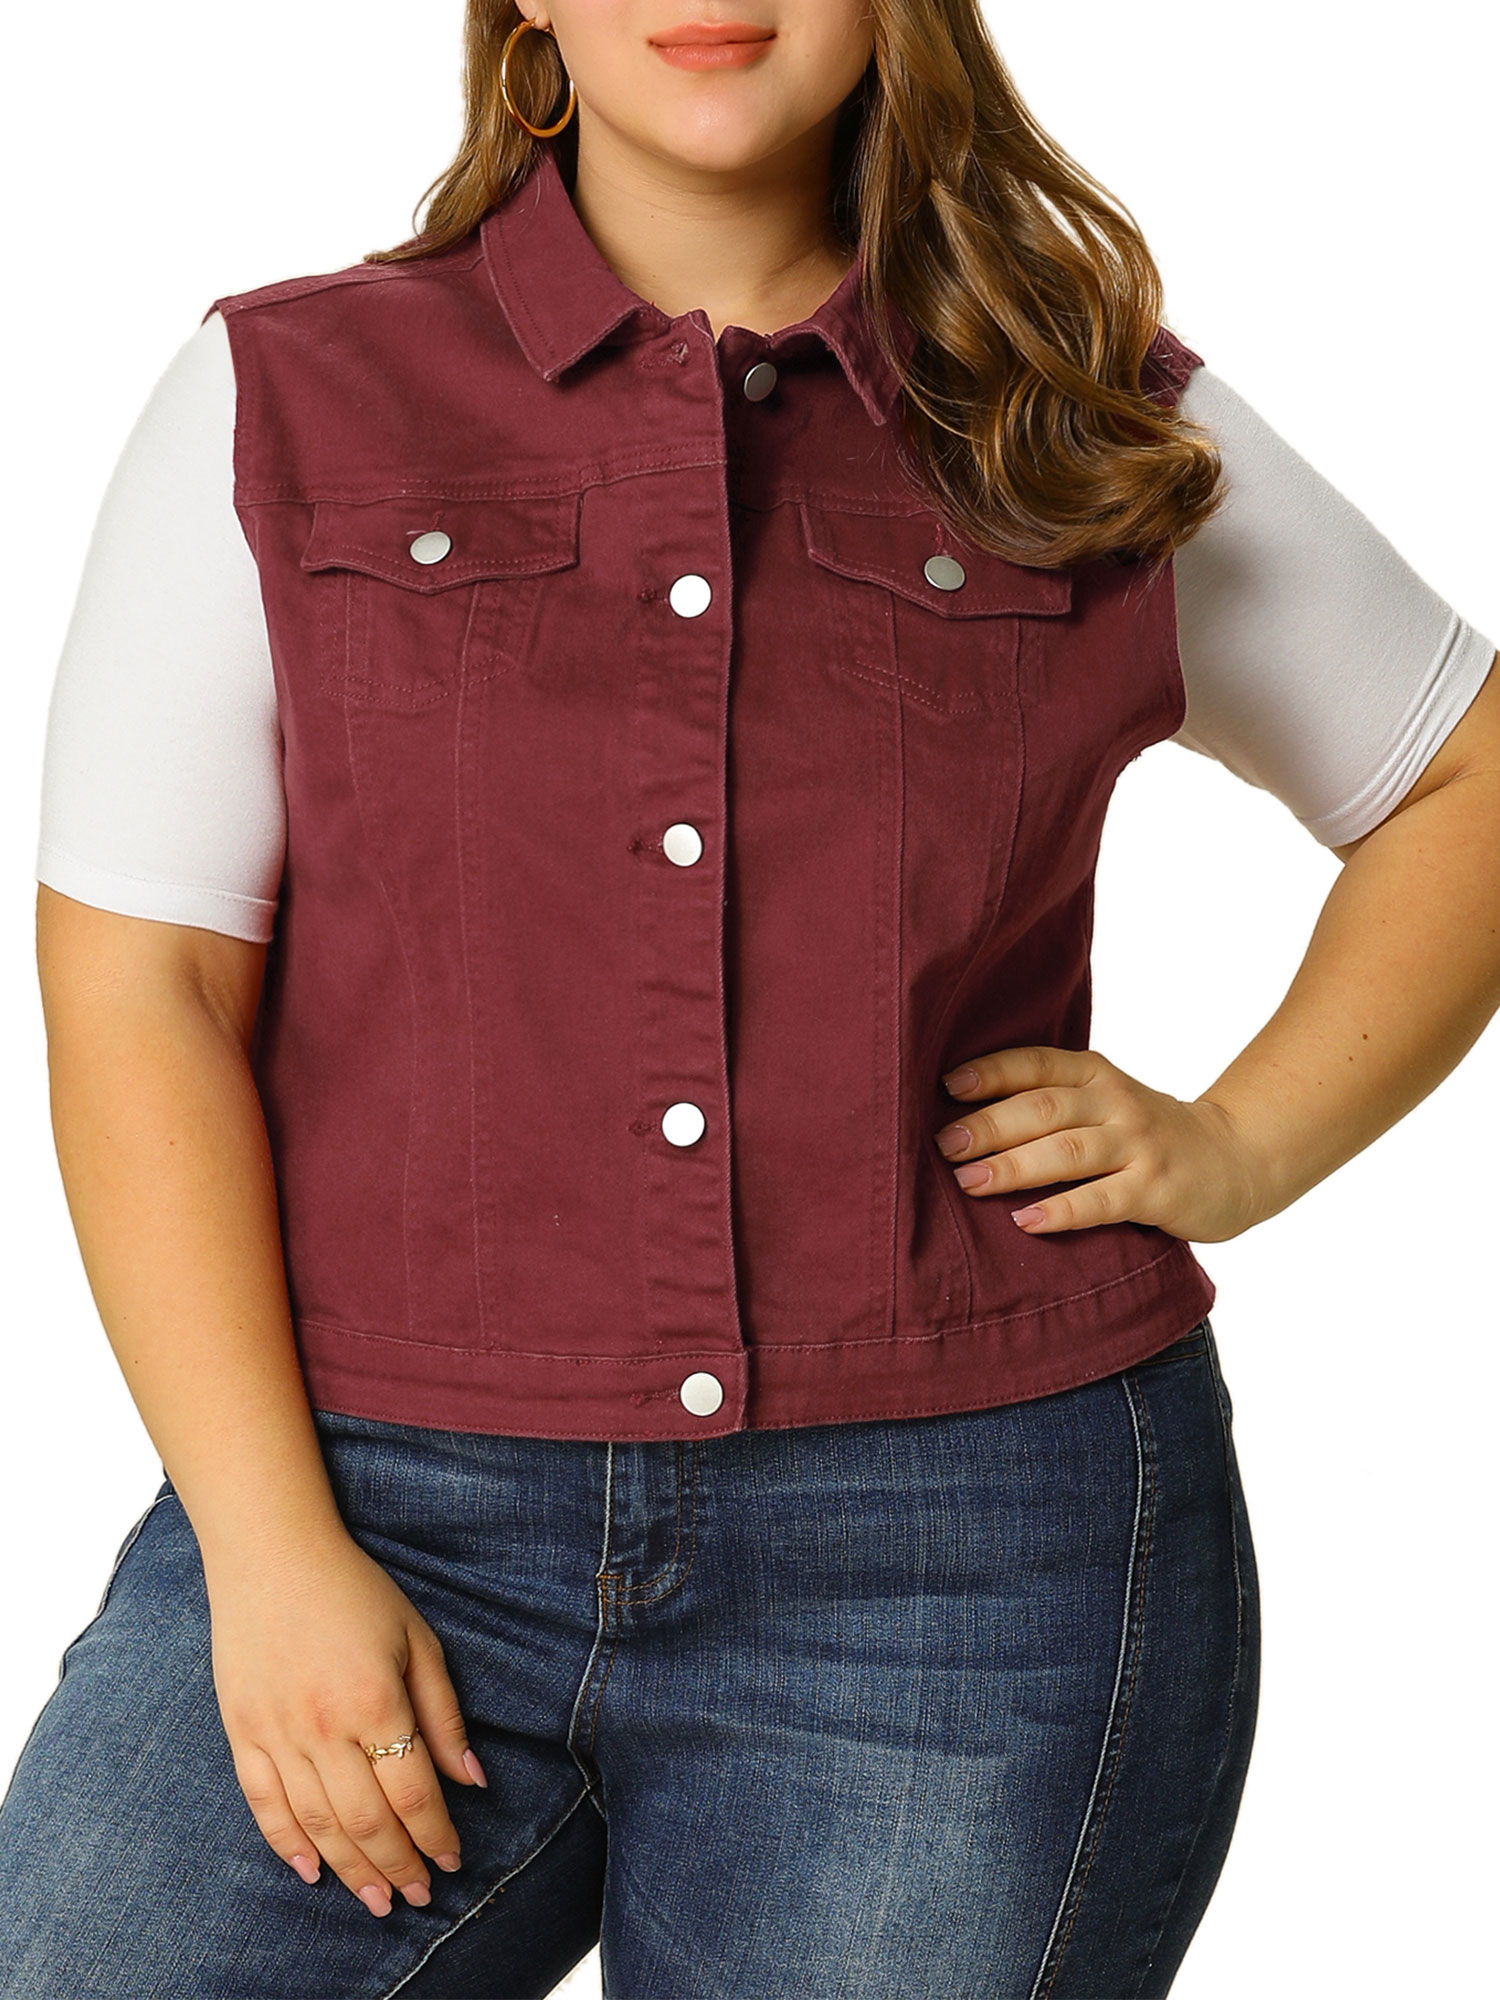 Agnes Orinda Women's Plus Size Casual Button Sleeveless Denim Vest Jacket - image 3 of 7